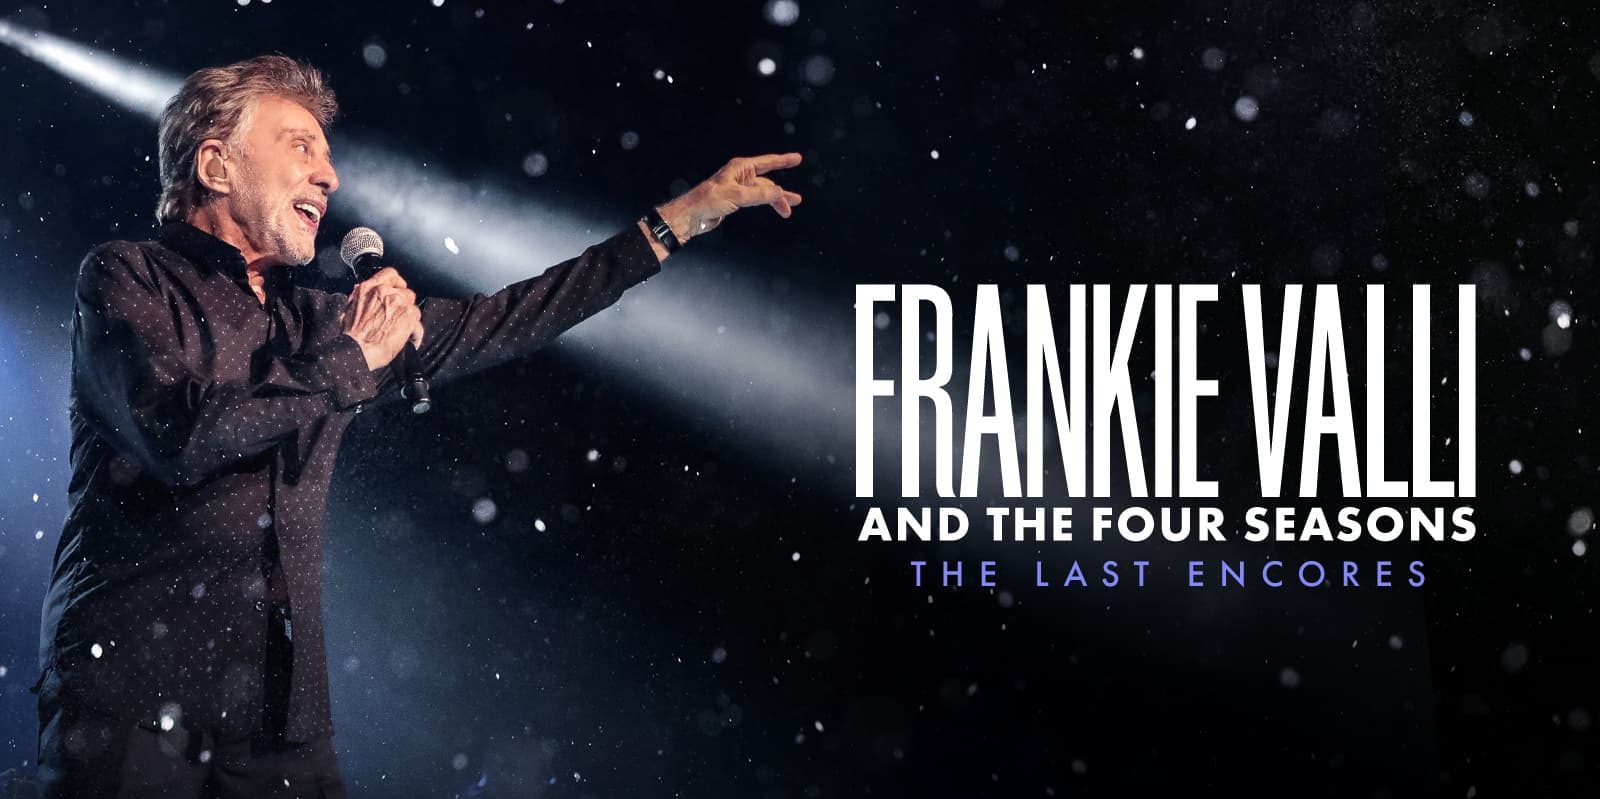 Frankie Valli promotional image